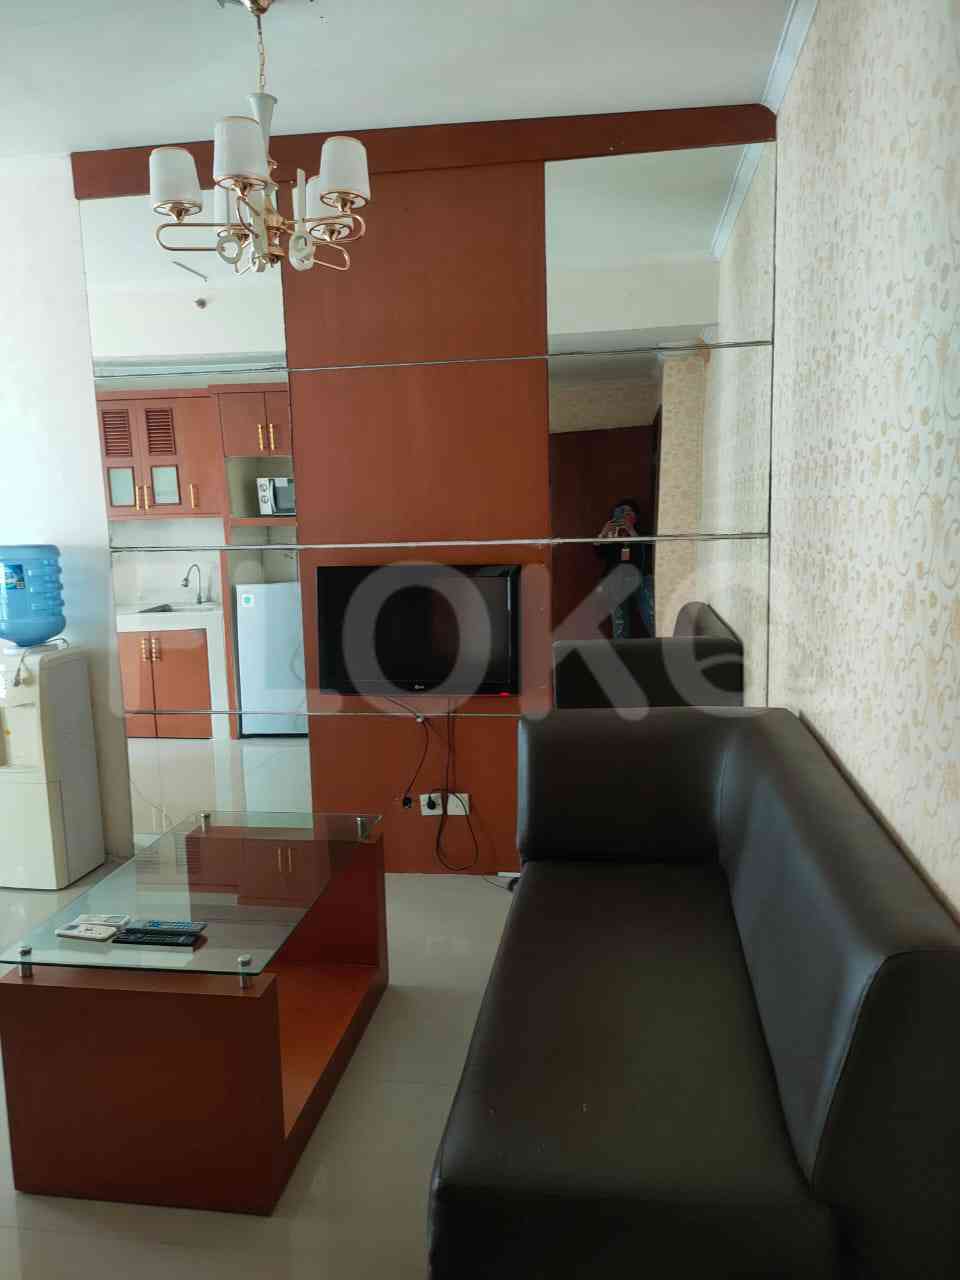 2 Bedroom on 6th Floor for Rent in Taman Anggrek Residence - fta3bd 1